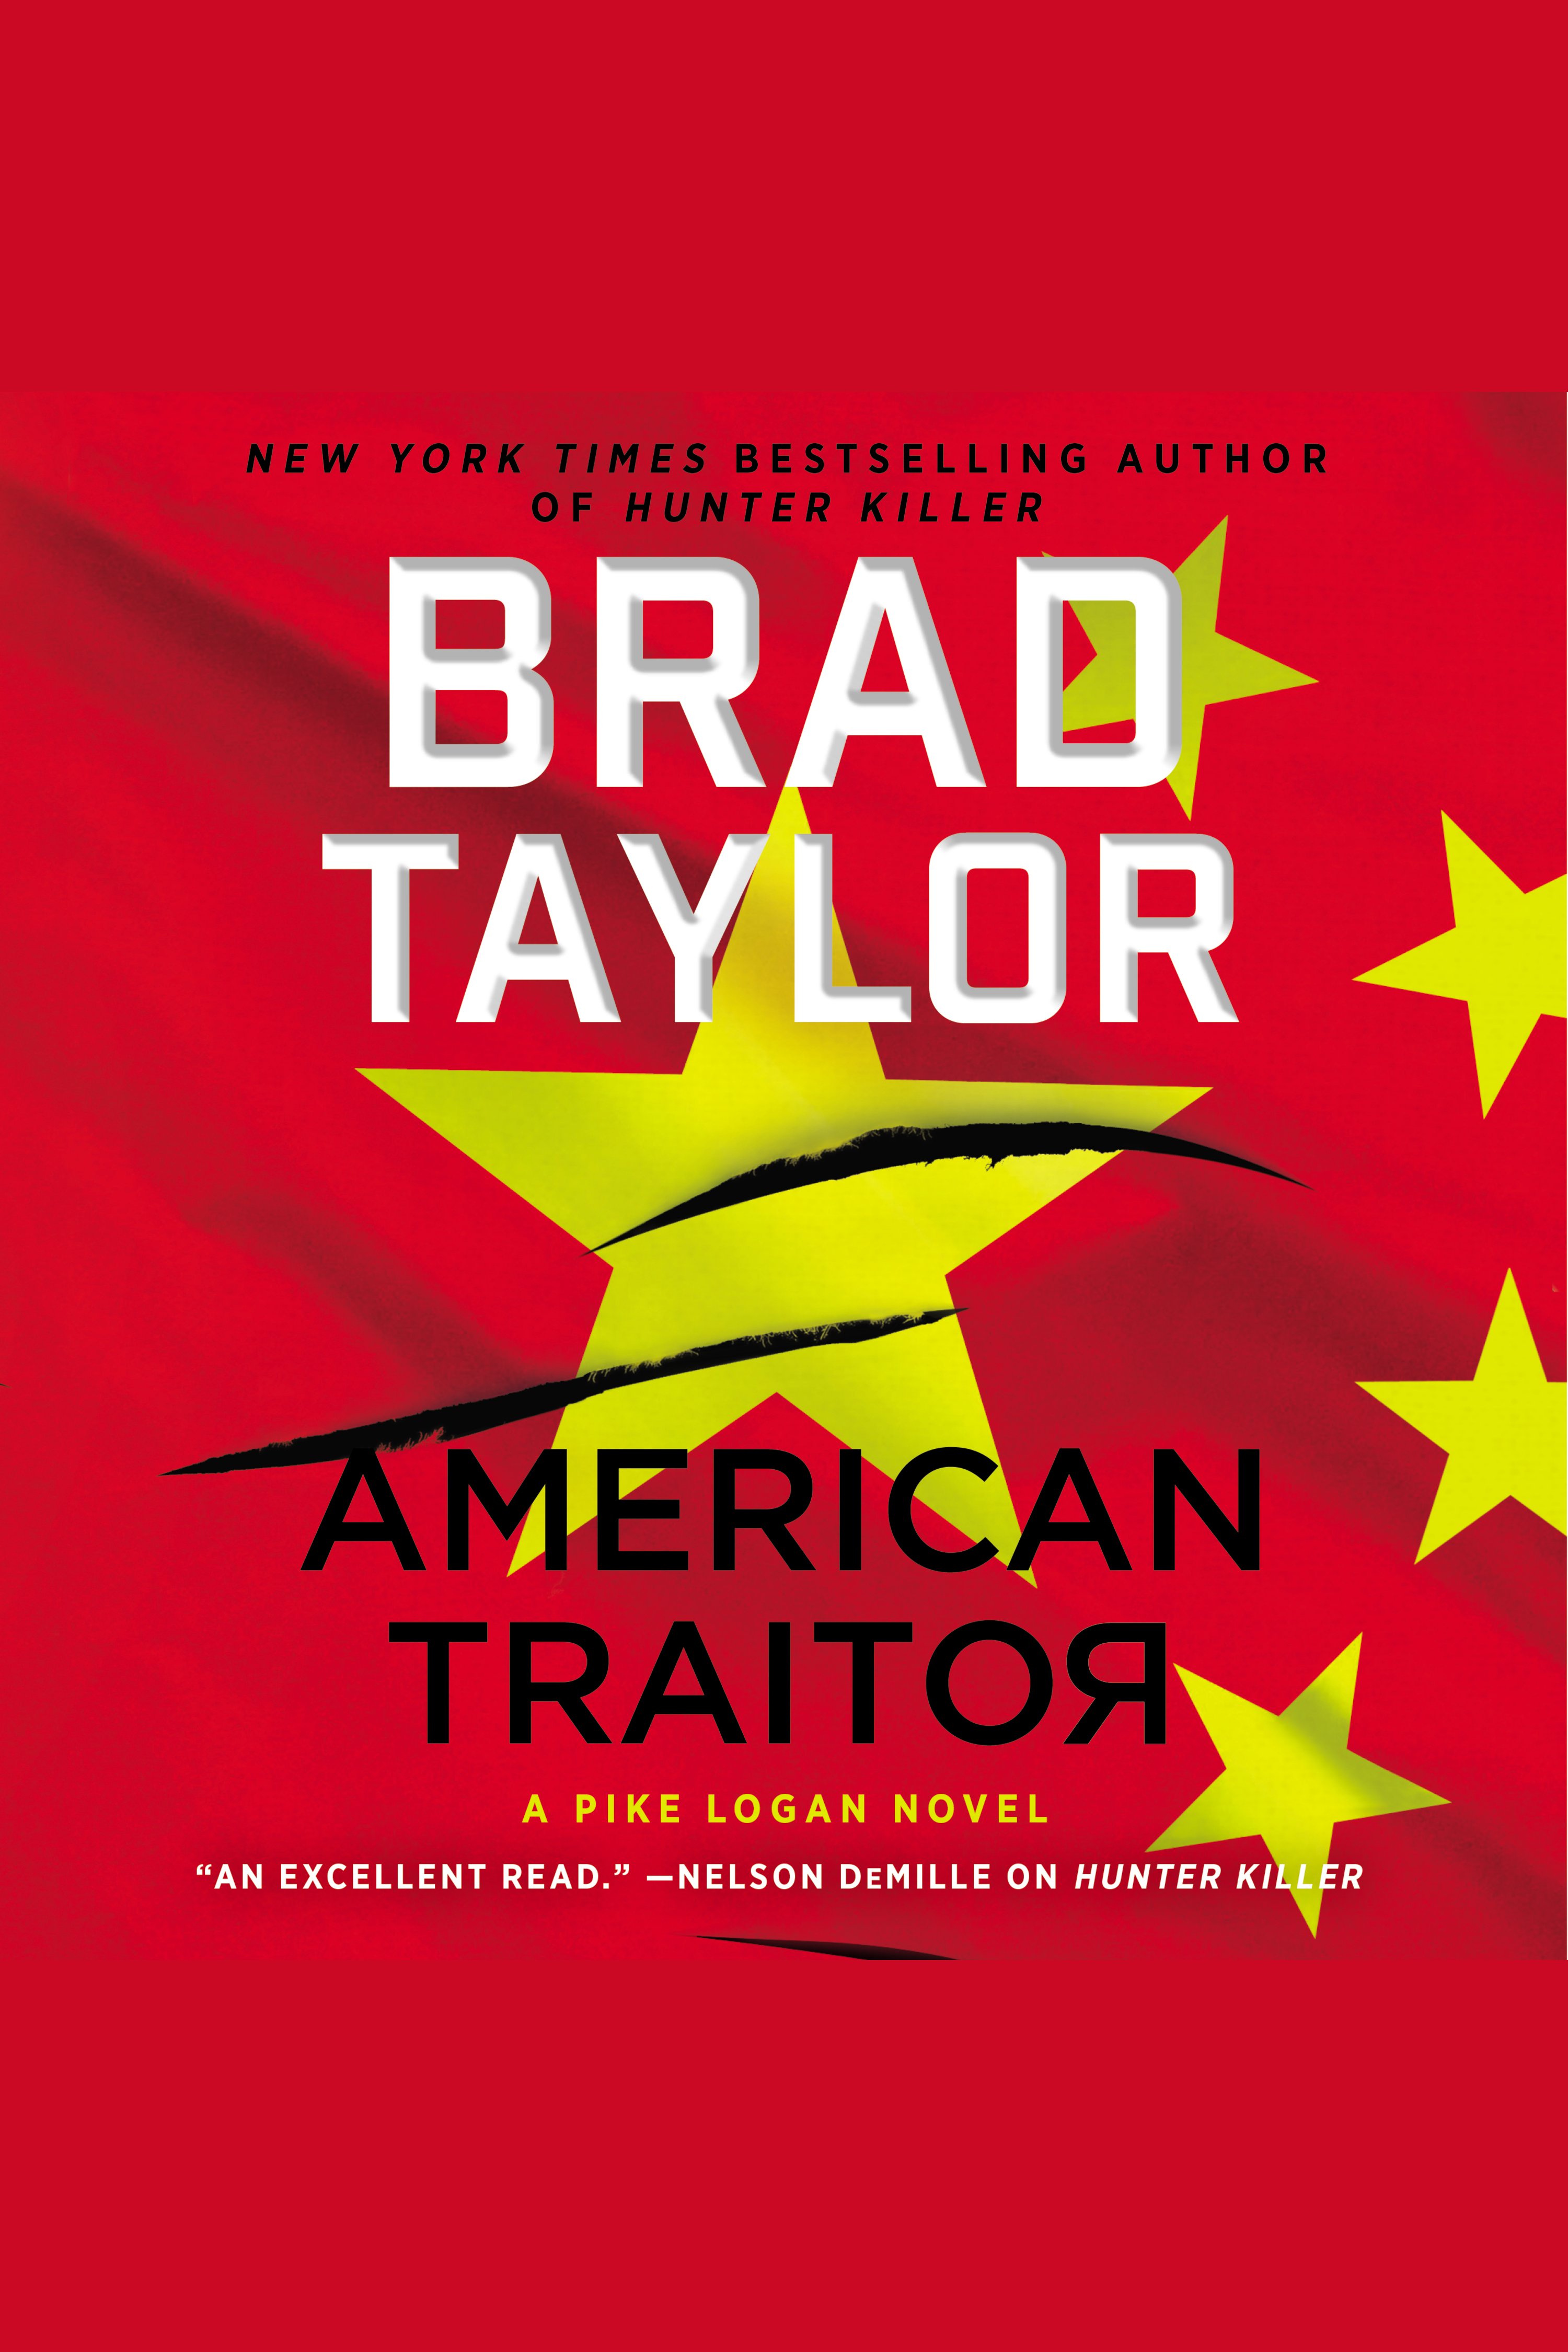 American Traitor A Pike Logan Novel cover image